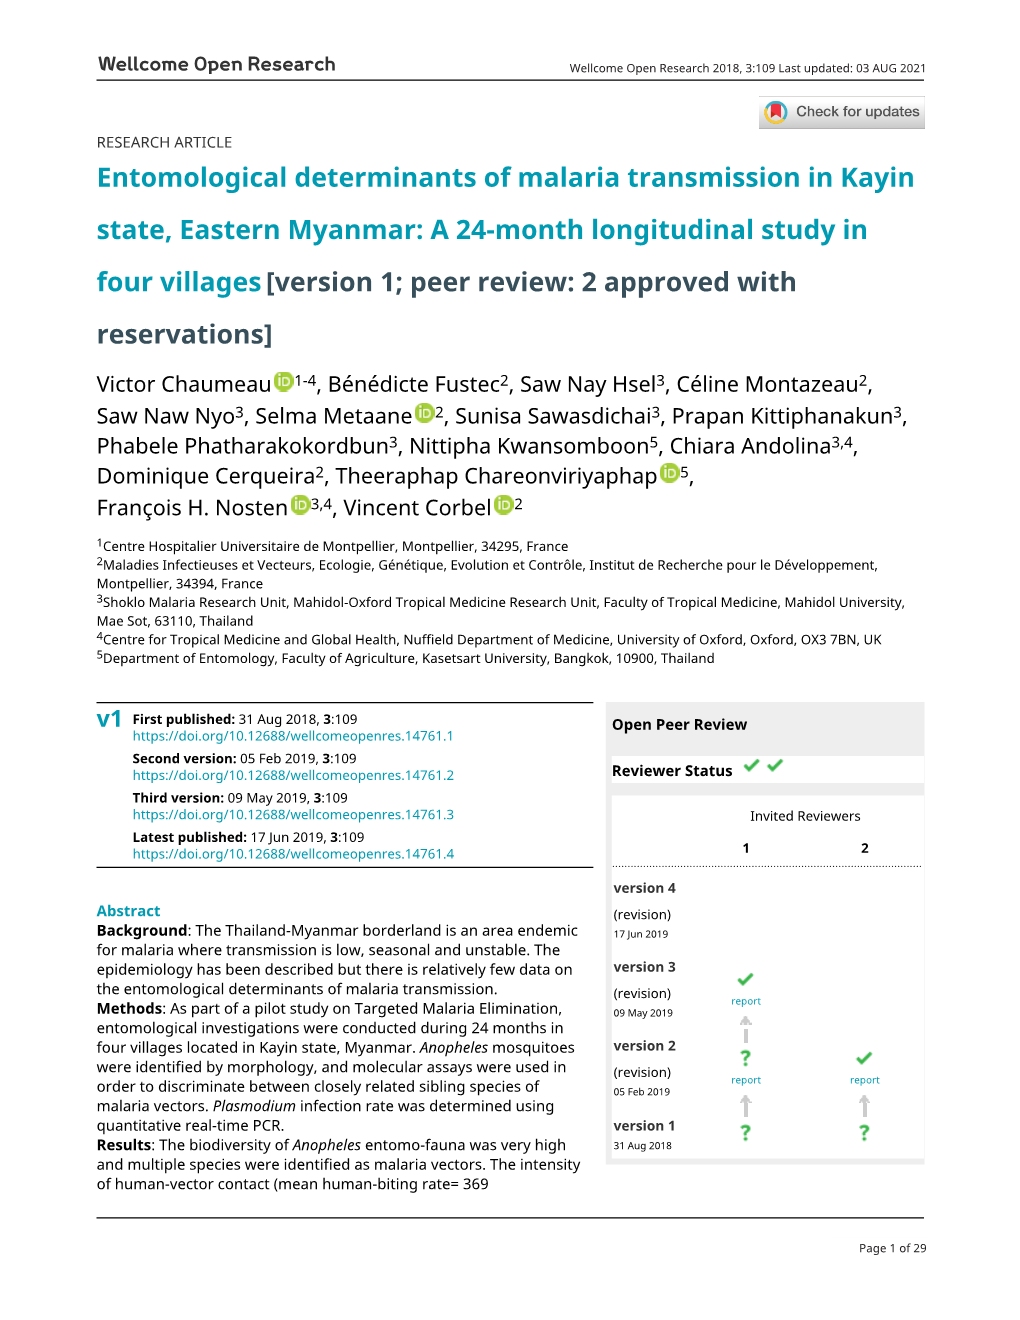 Entomological Determinants of Malaria Transmission in Kayin State